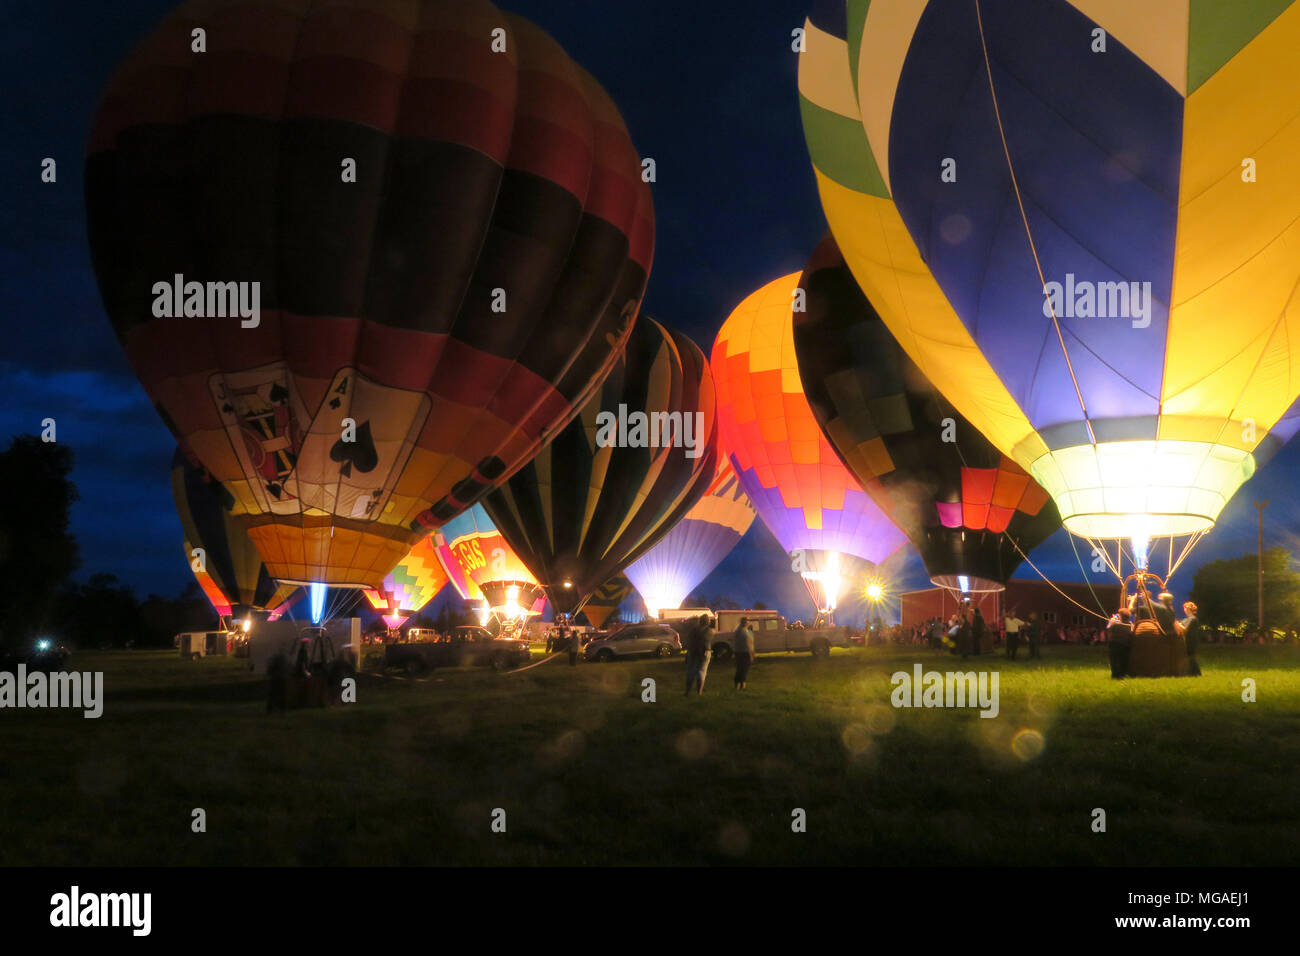 Hot Air Balloon glow mit Flammen an einem Connecticut Balloon Festival Abend ballon Glühen Stockfoto